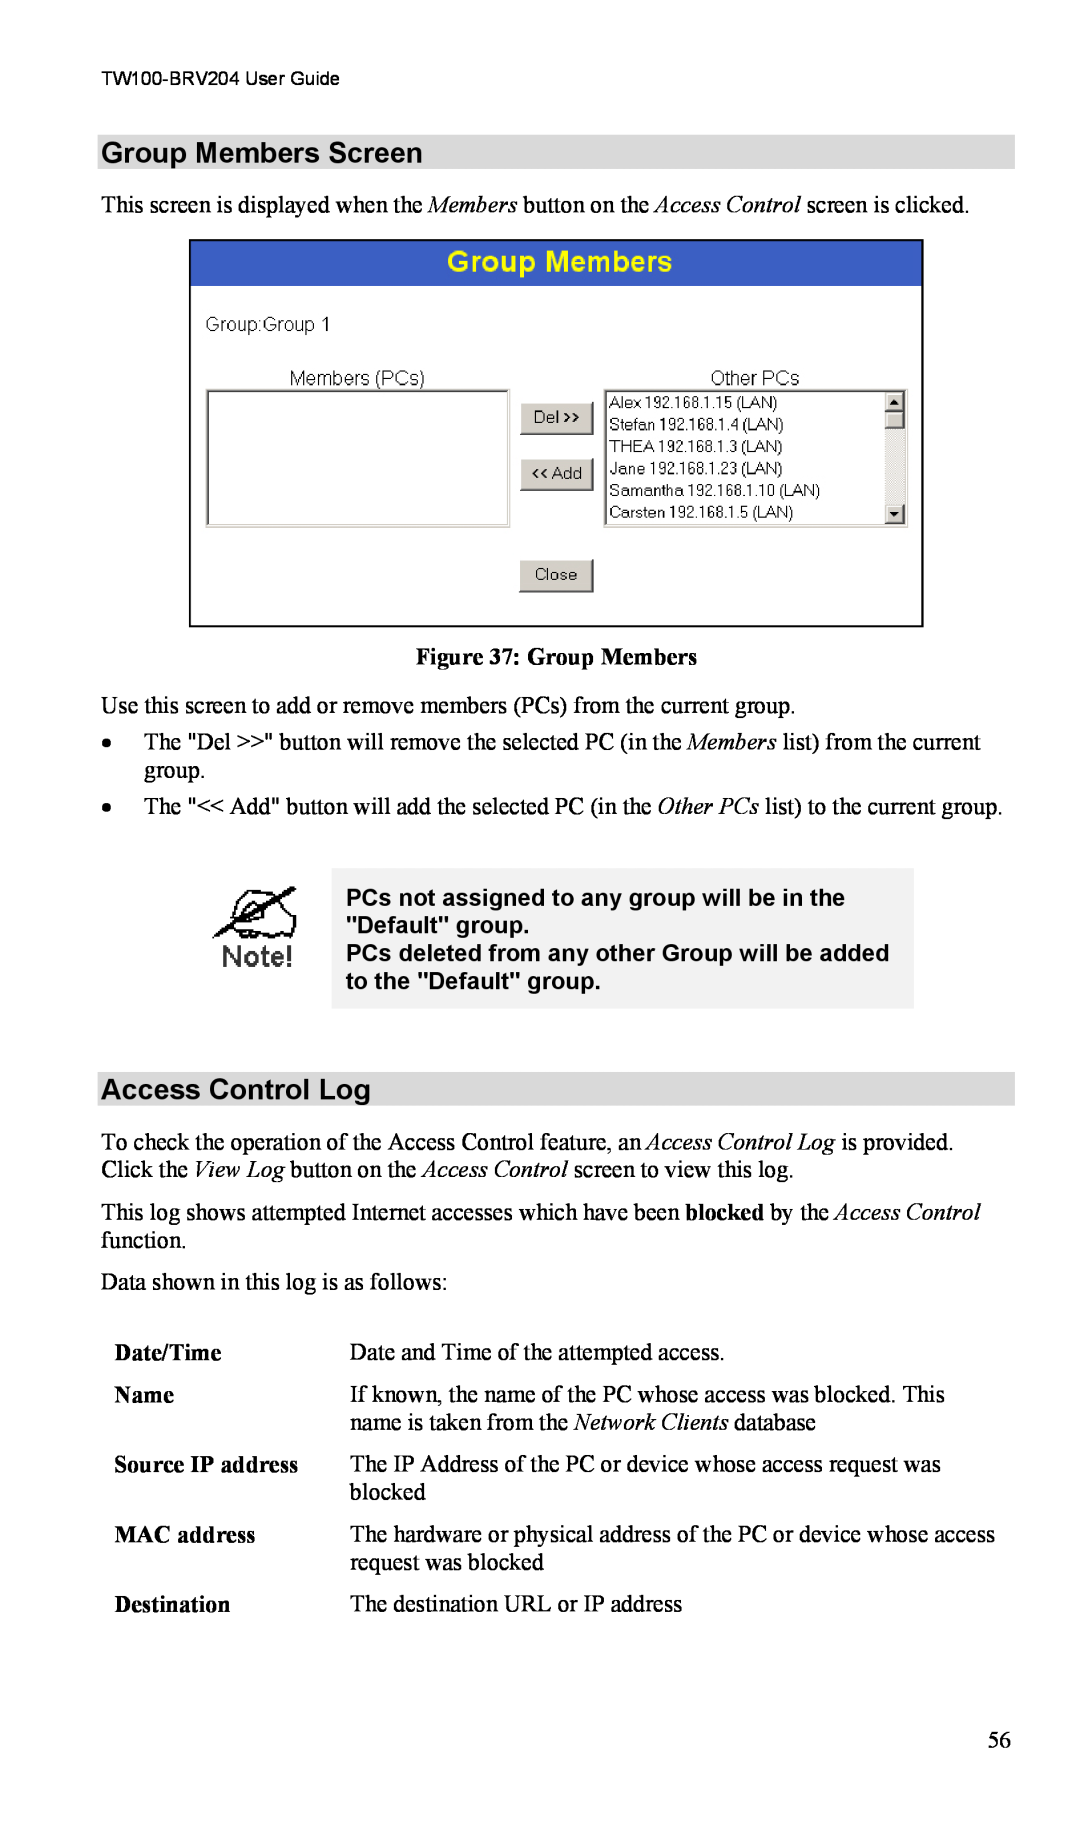 TRENDnet VPN Firewall Router, TW100-BRV204 manual Group Members Screen, Access Control Log 